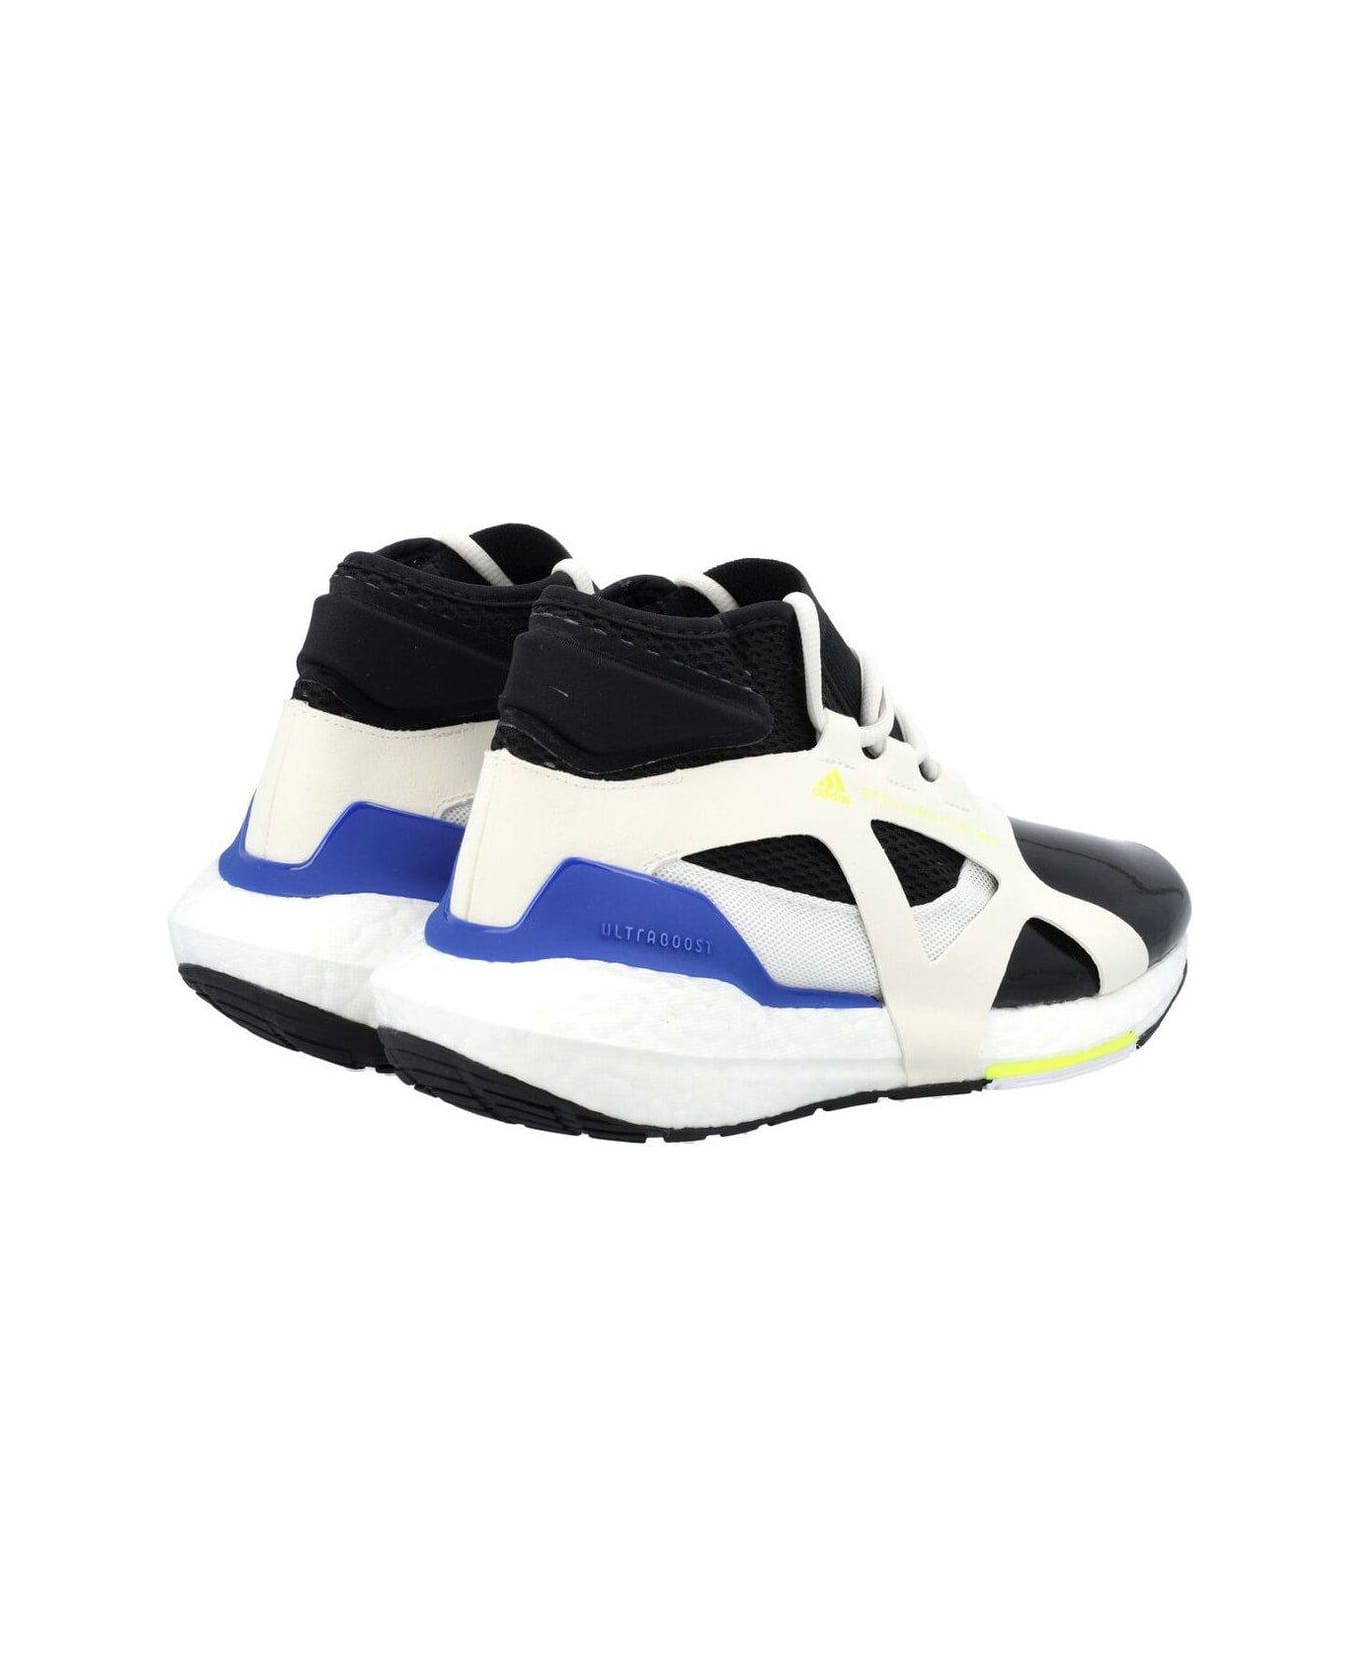 Adidas by Stella McCartney Ultraboost 21 Sneakers - Multiple colors スニーカー